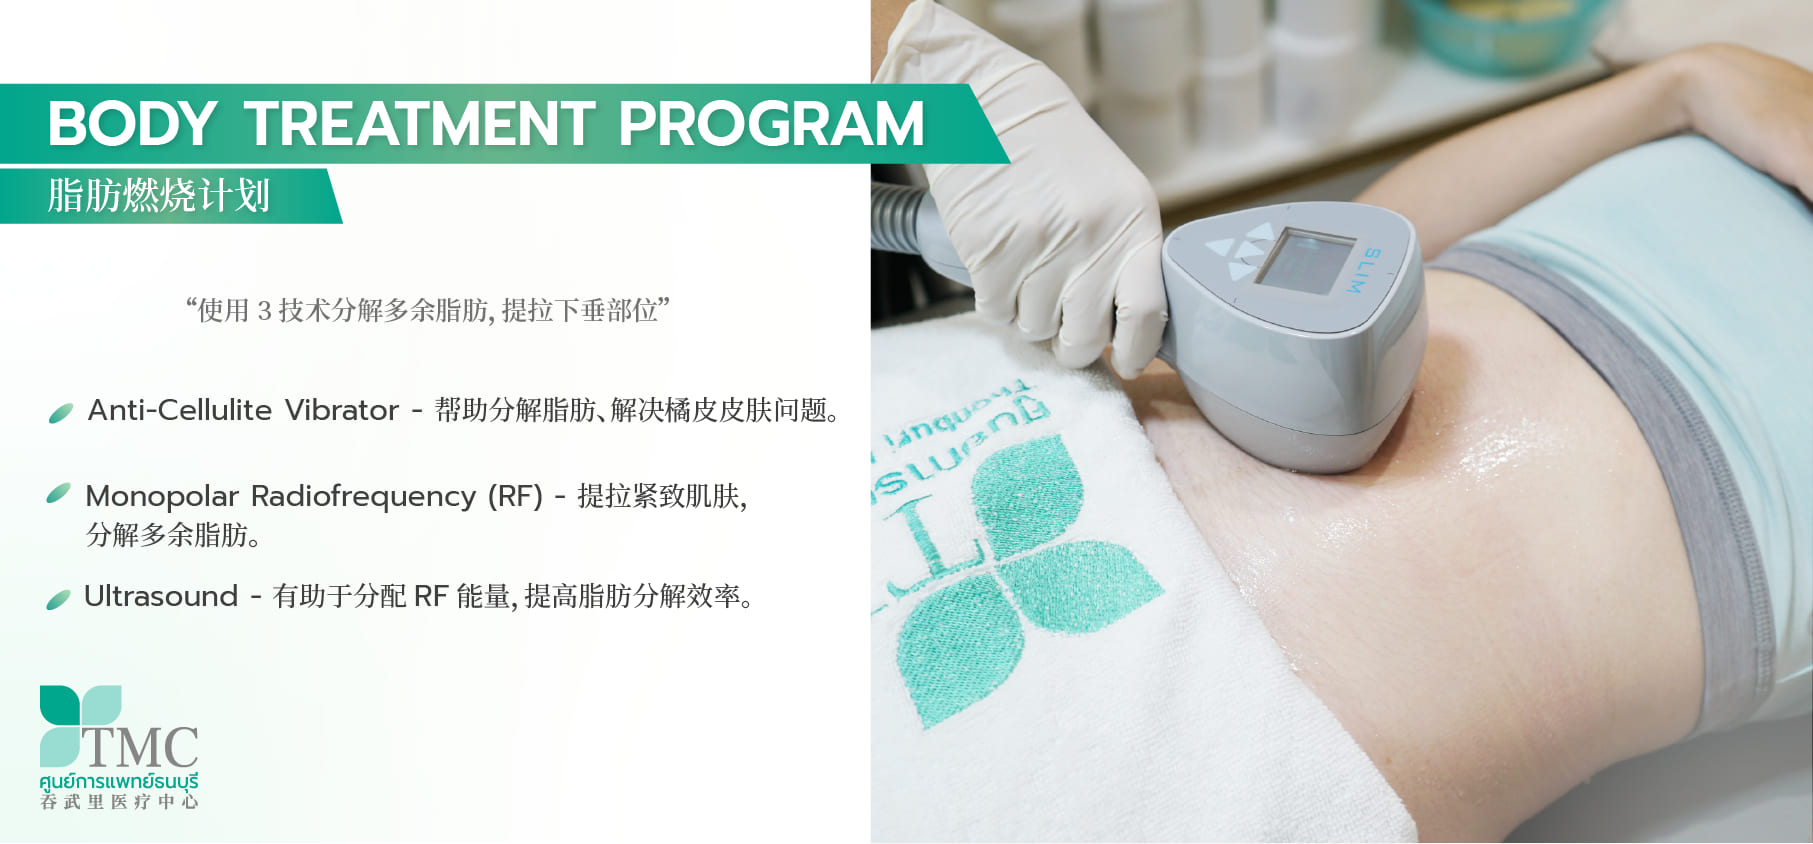 Body Treatment Program